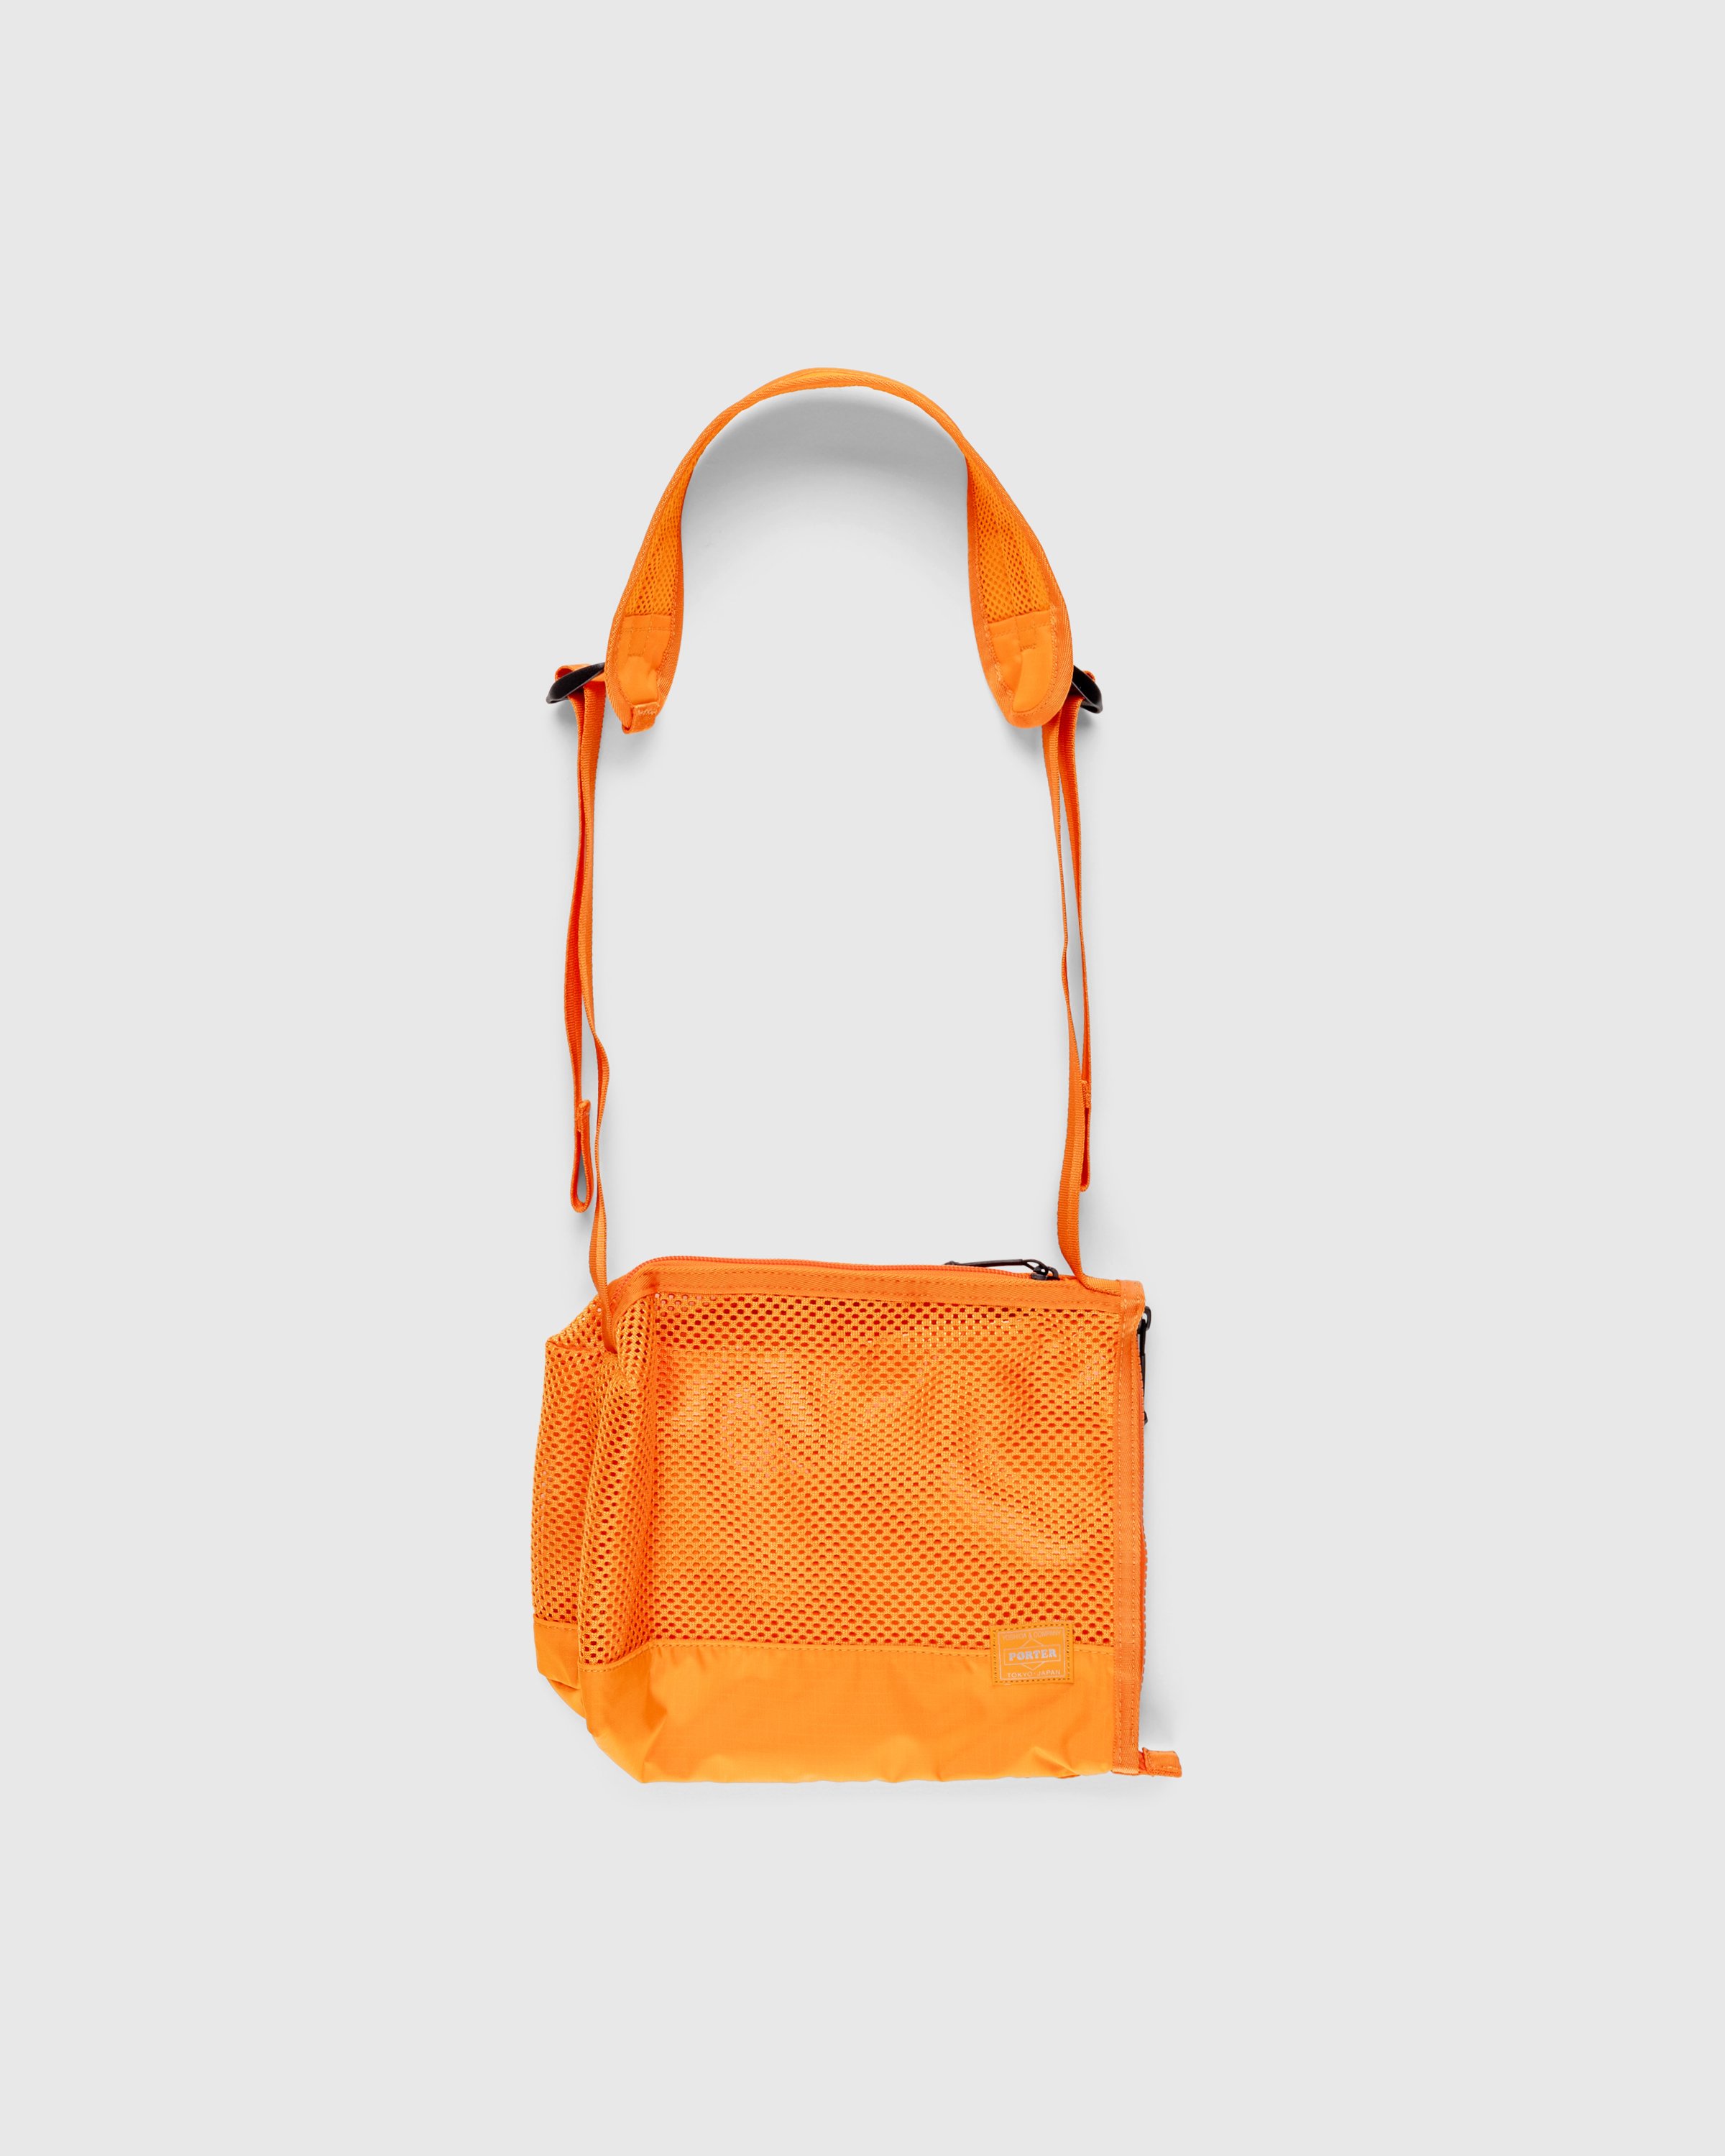 Porter-Yoshida & Co. – Screen Front Side Bag Orange | Highsnobiety 